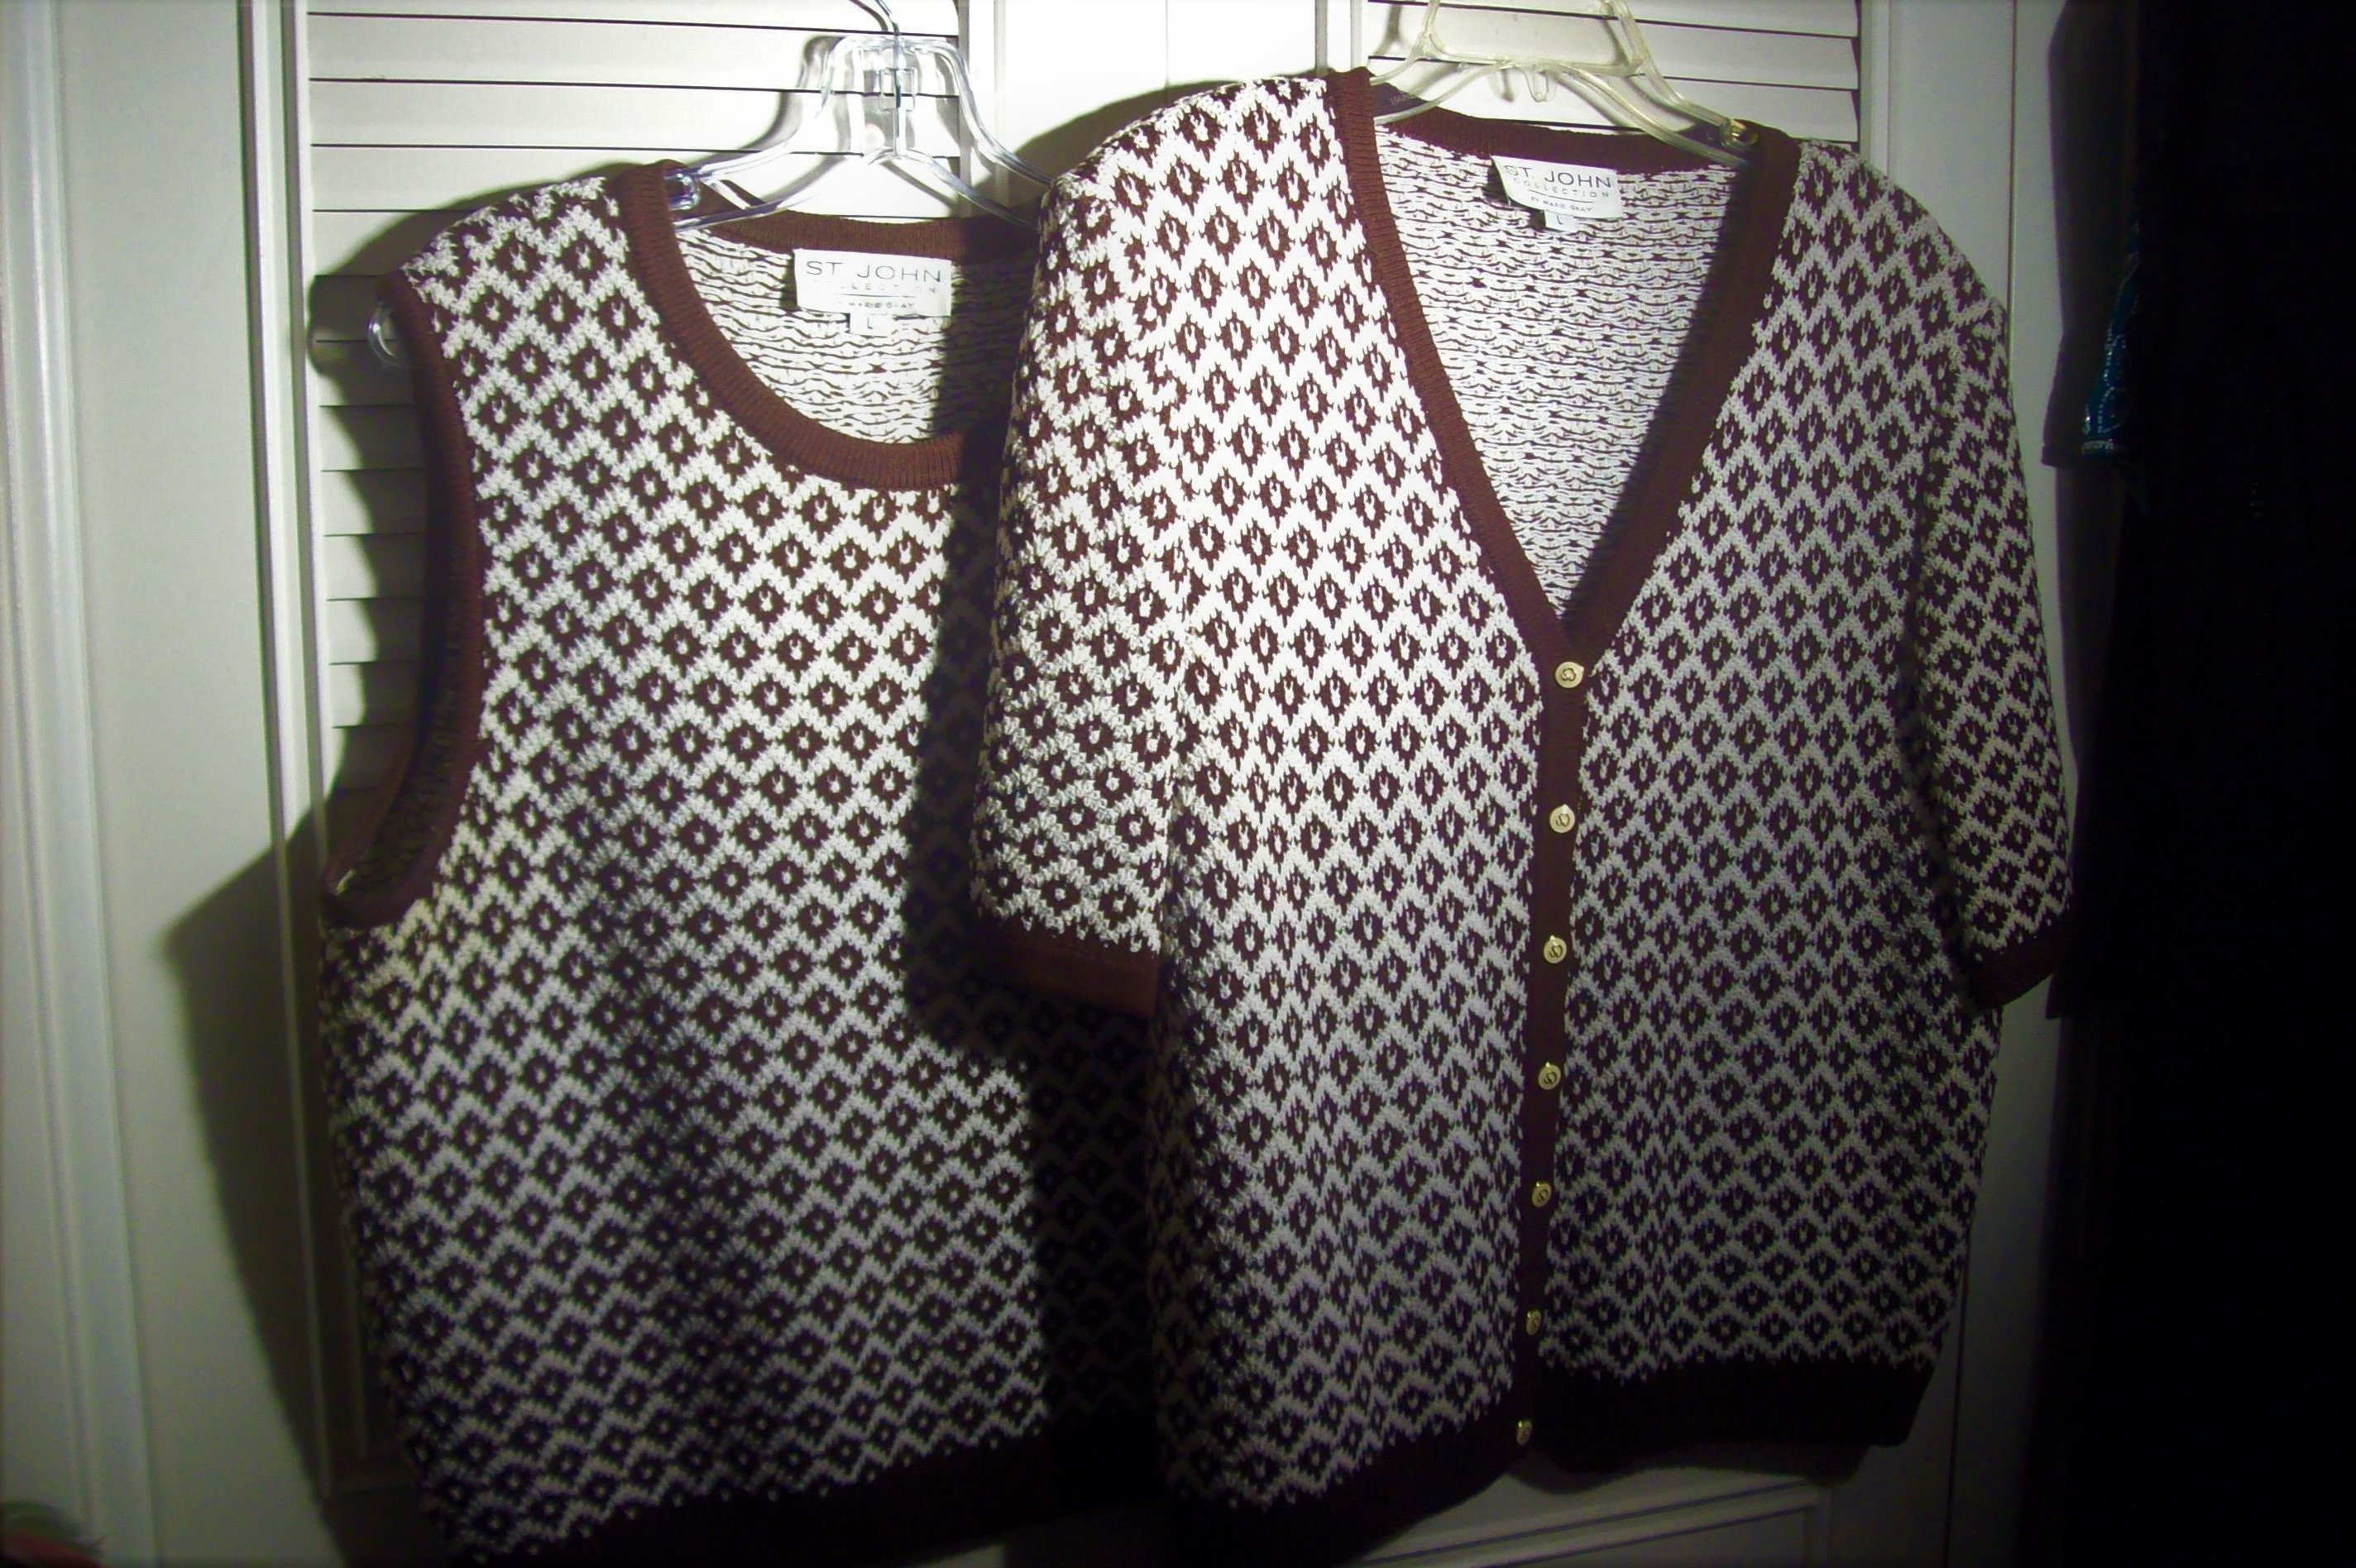 Sweater Large, Adrienne Vittadini Sweater Set, Cotton Knit Travel